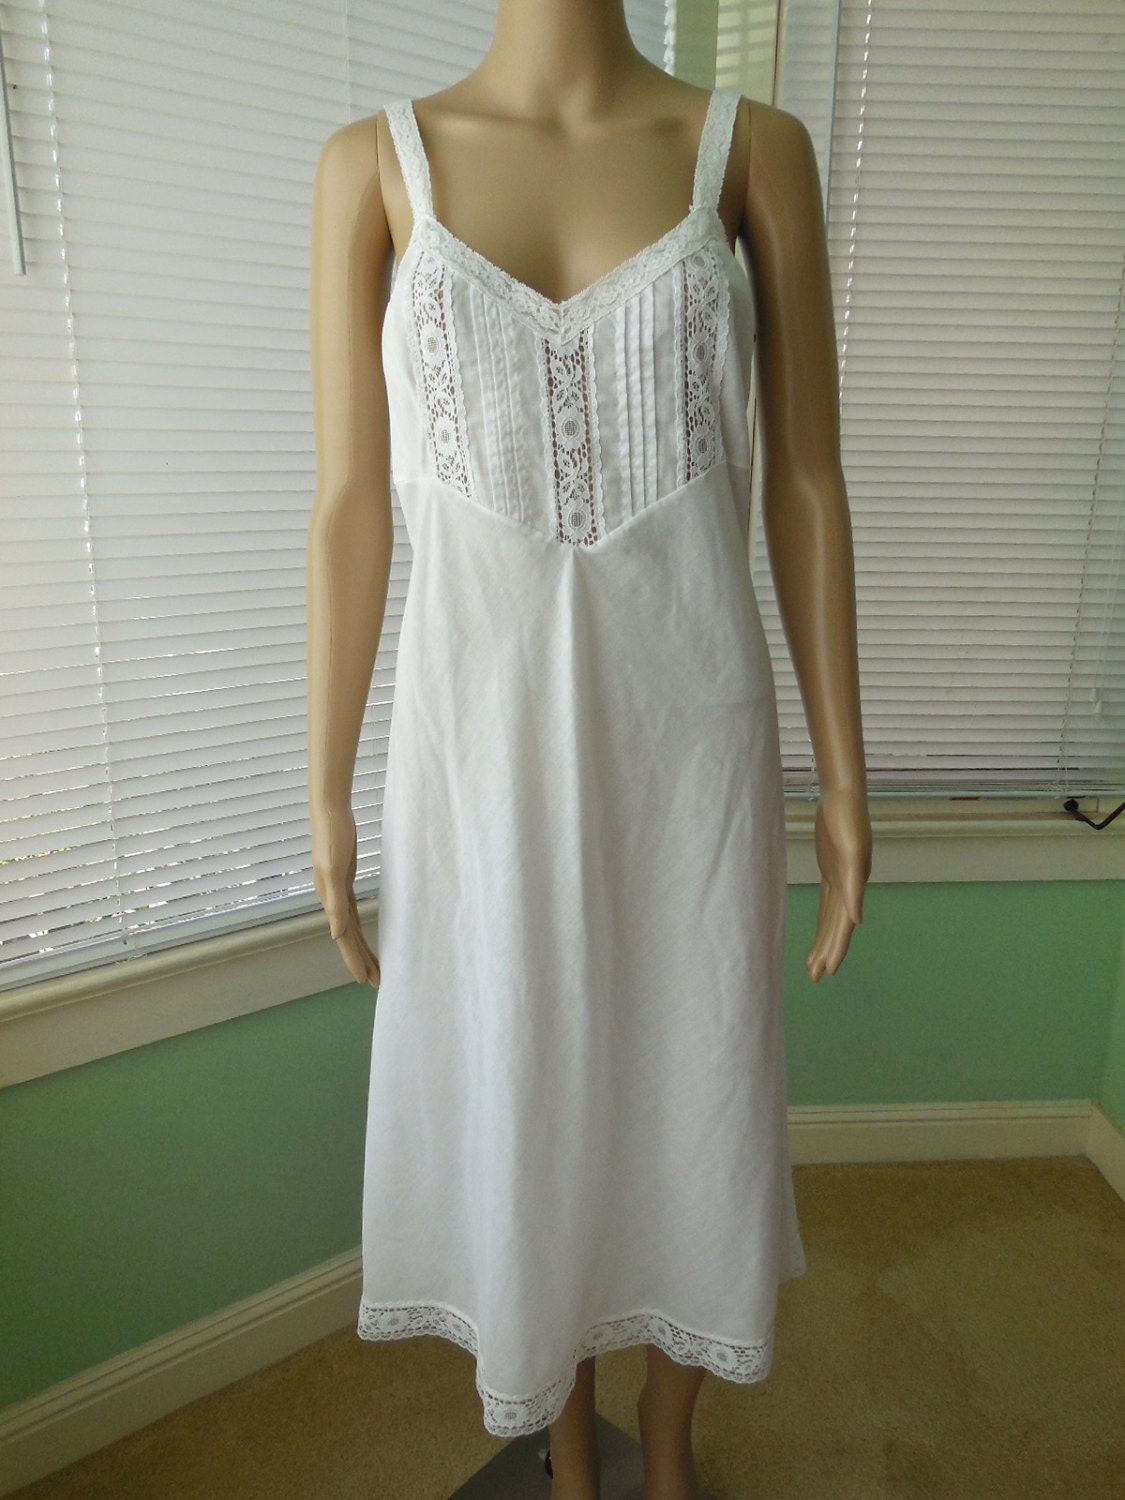 Vintage DRESS SLIP Bridal White Slip Sheer Lace by SeadawlVintage